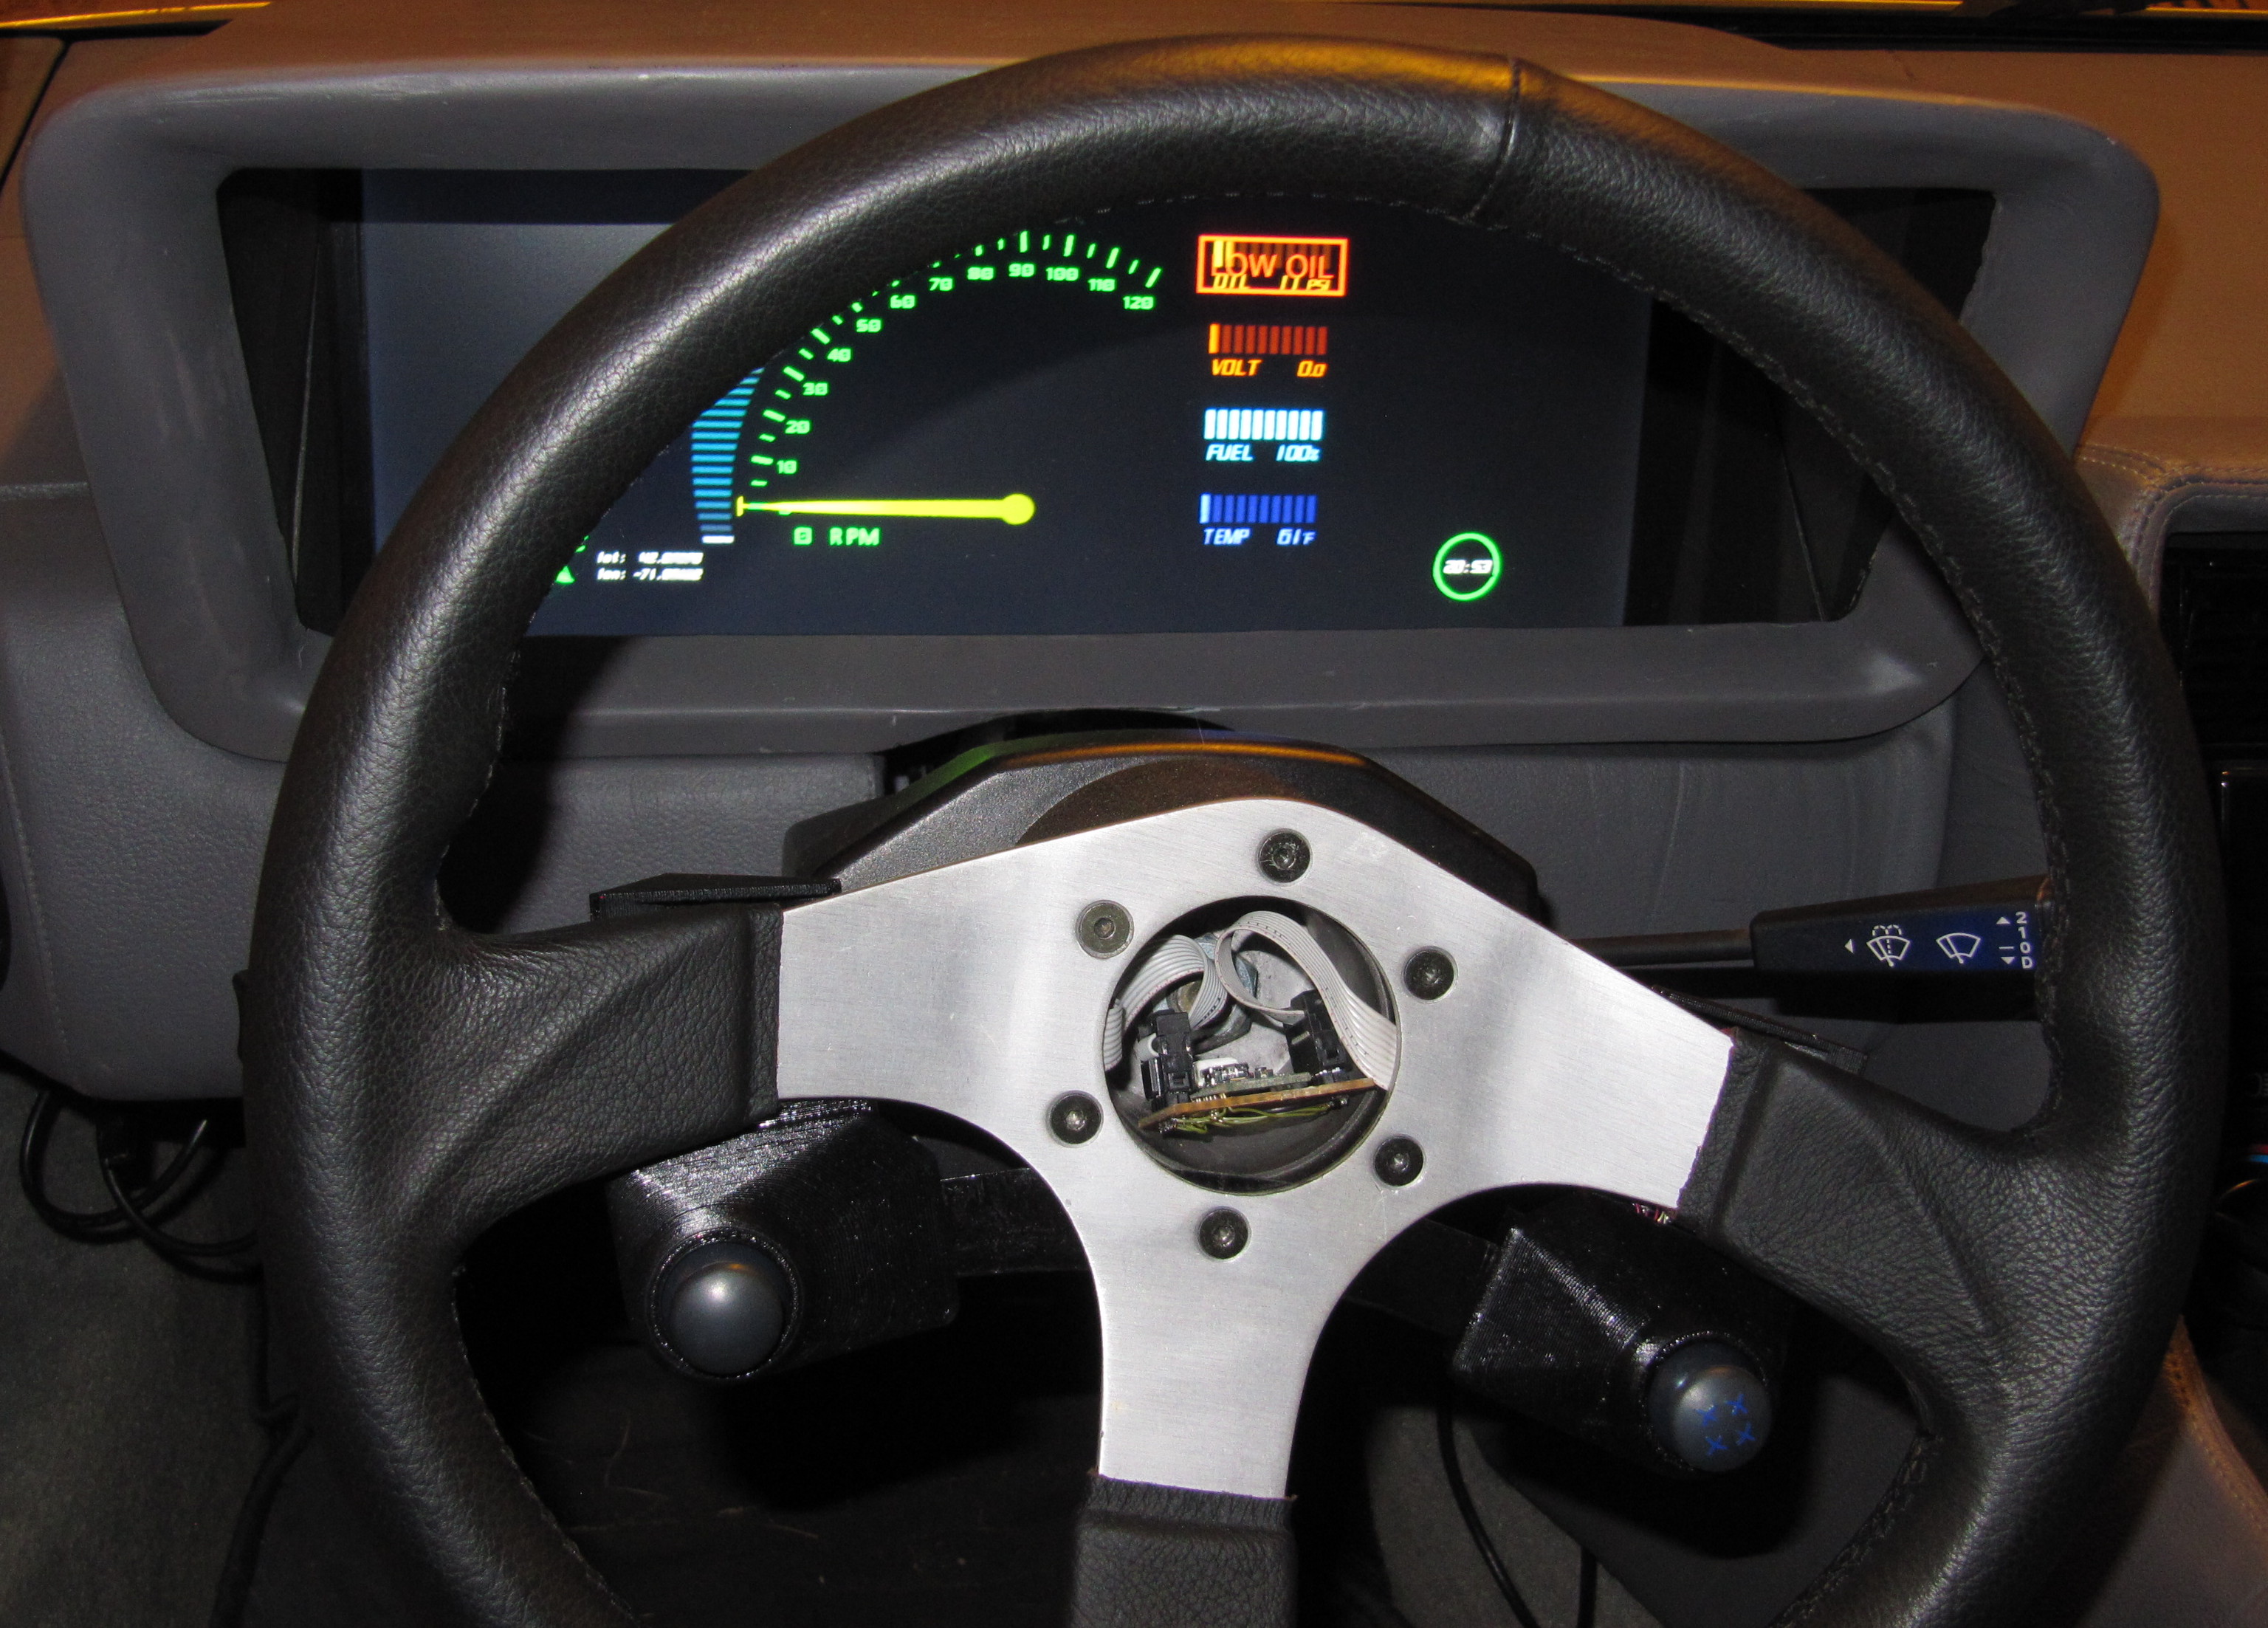 Steering wheel, with analog sticks